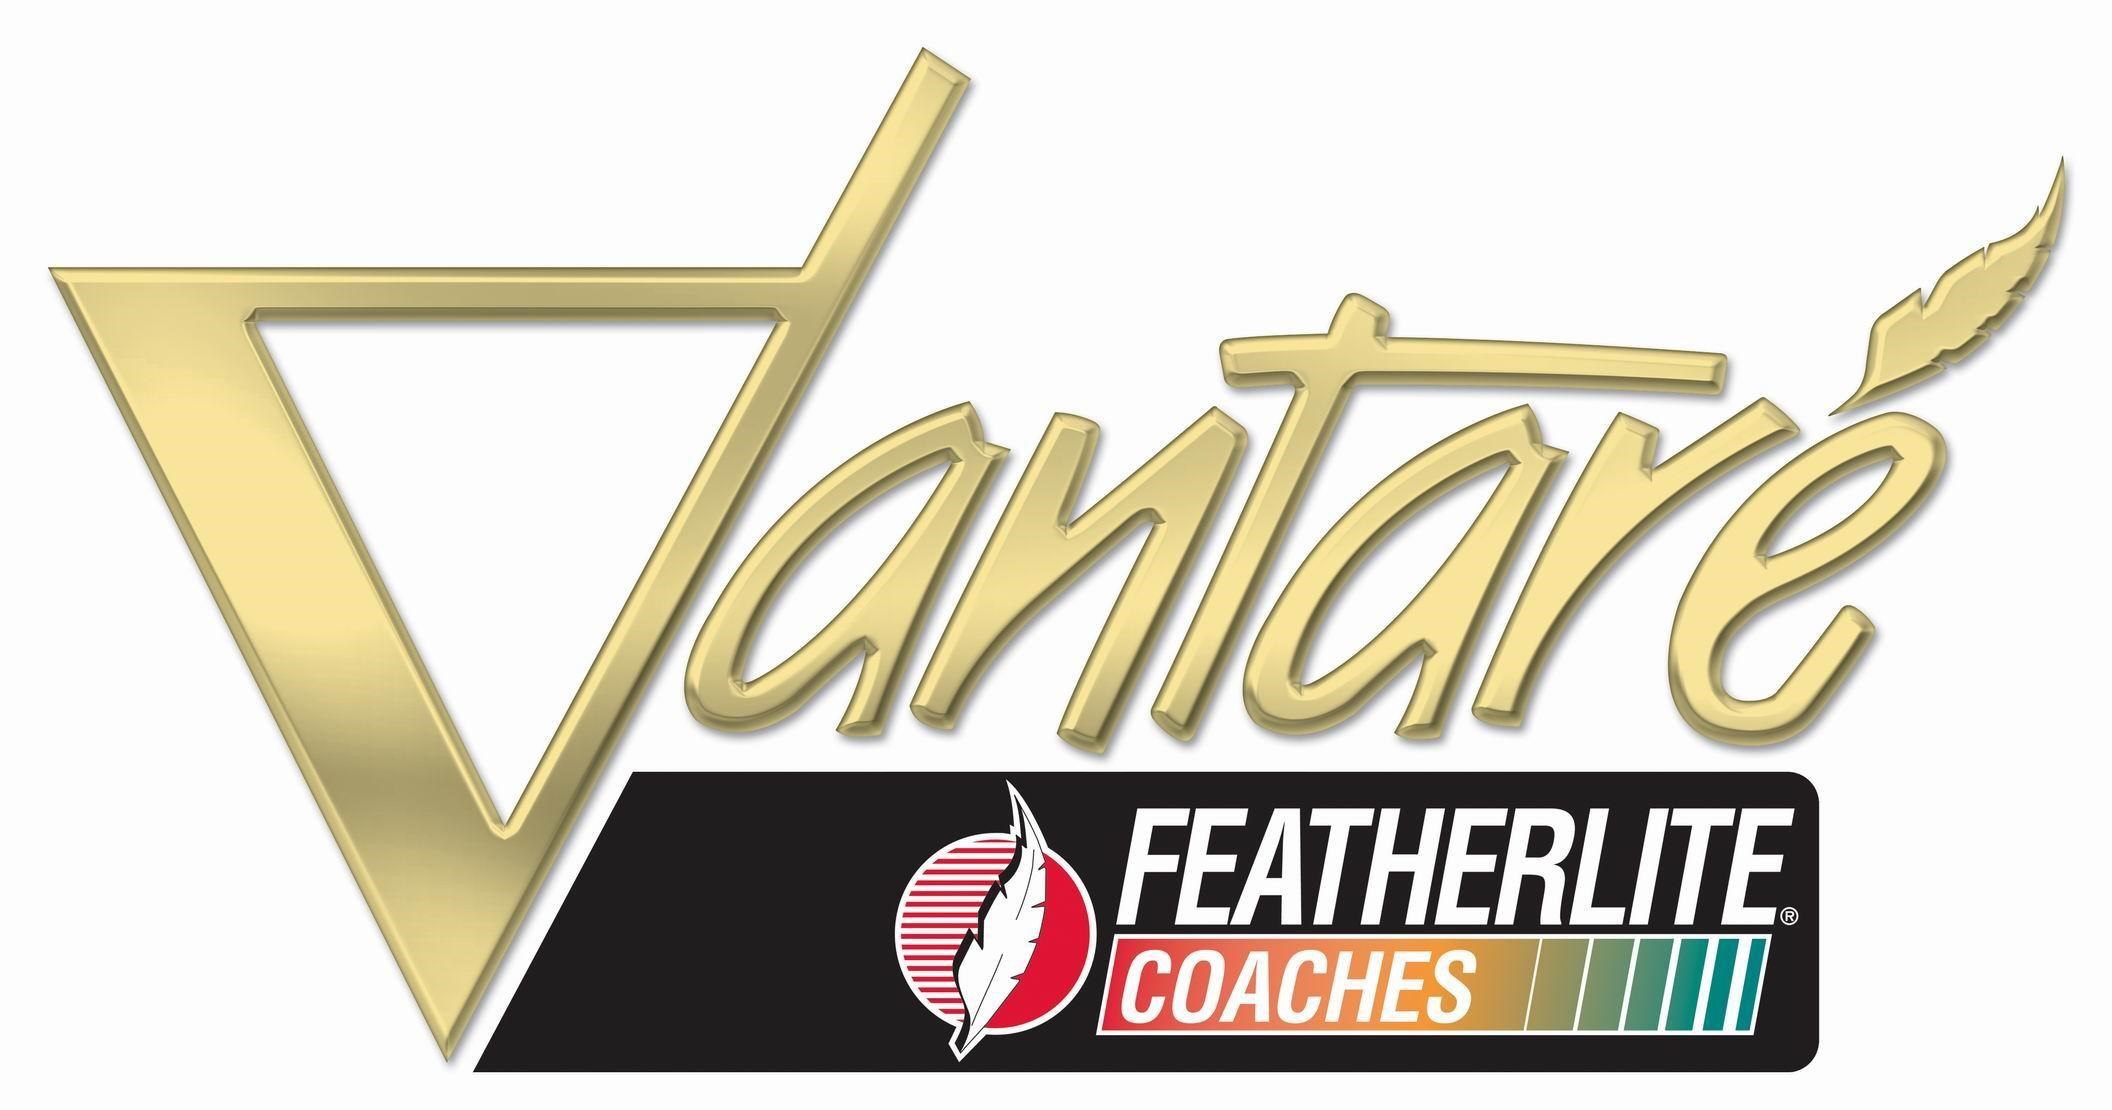 vantare featherlite coaches